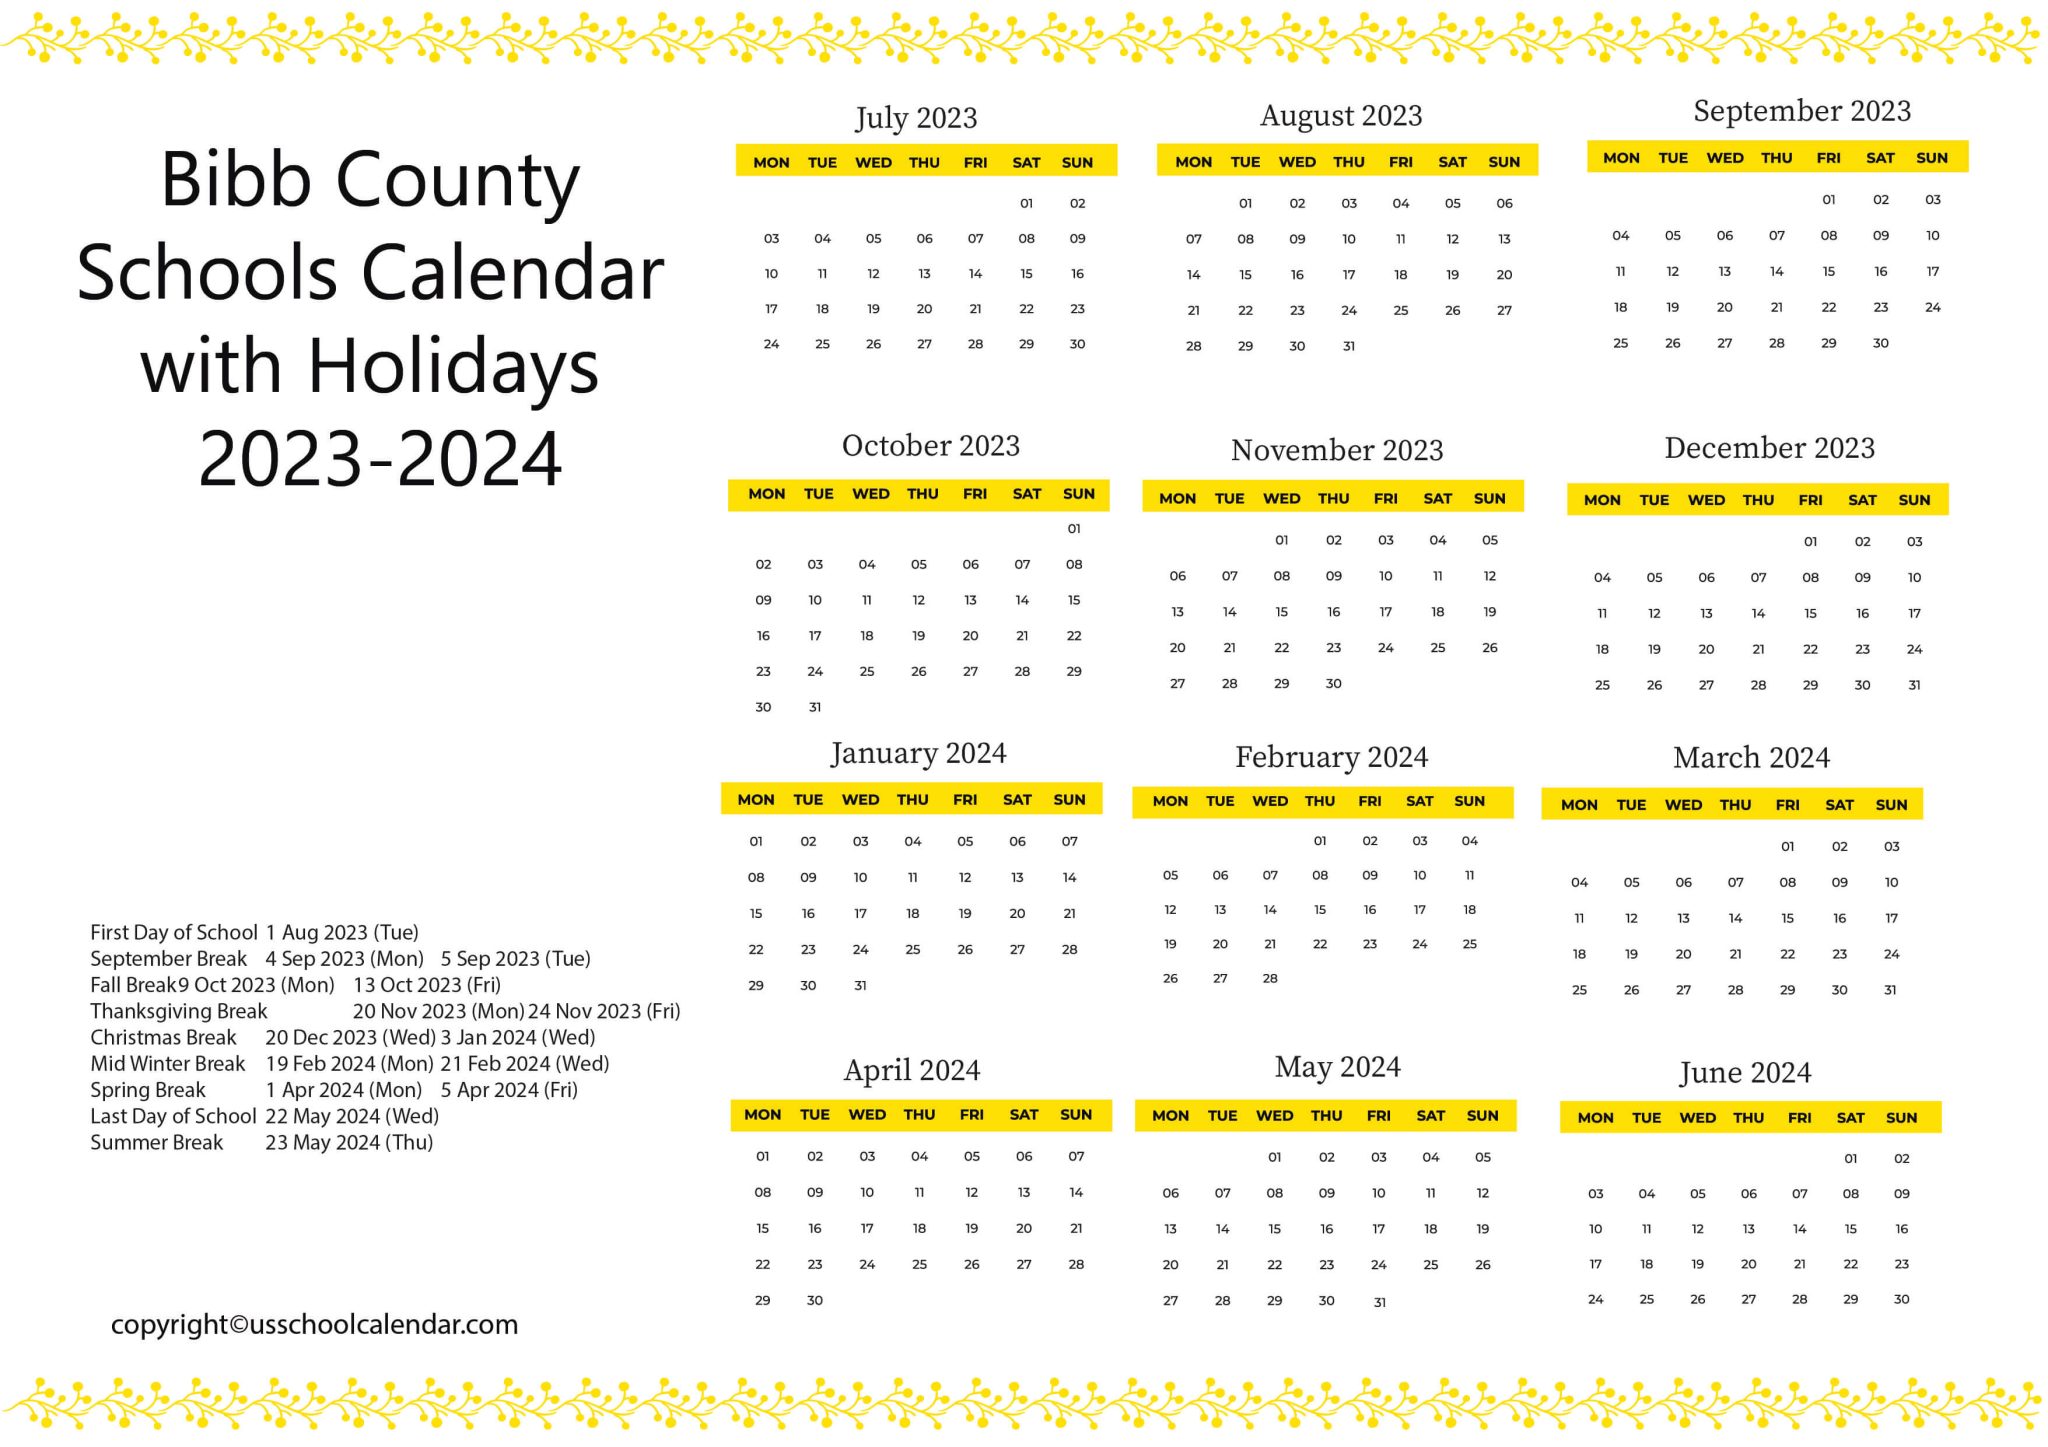 bibb-county-schools-calendar-with-holidays-2023-2024